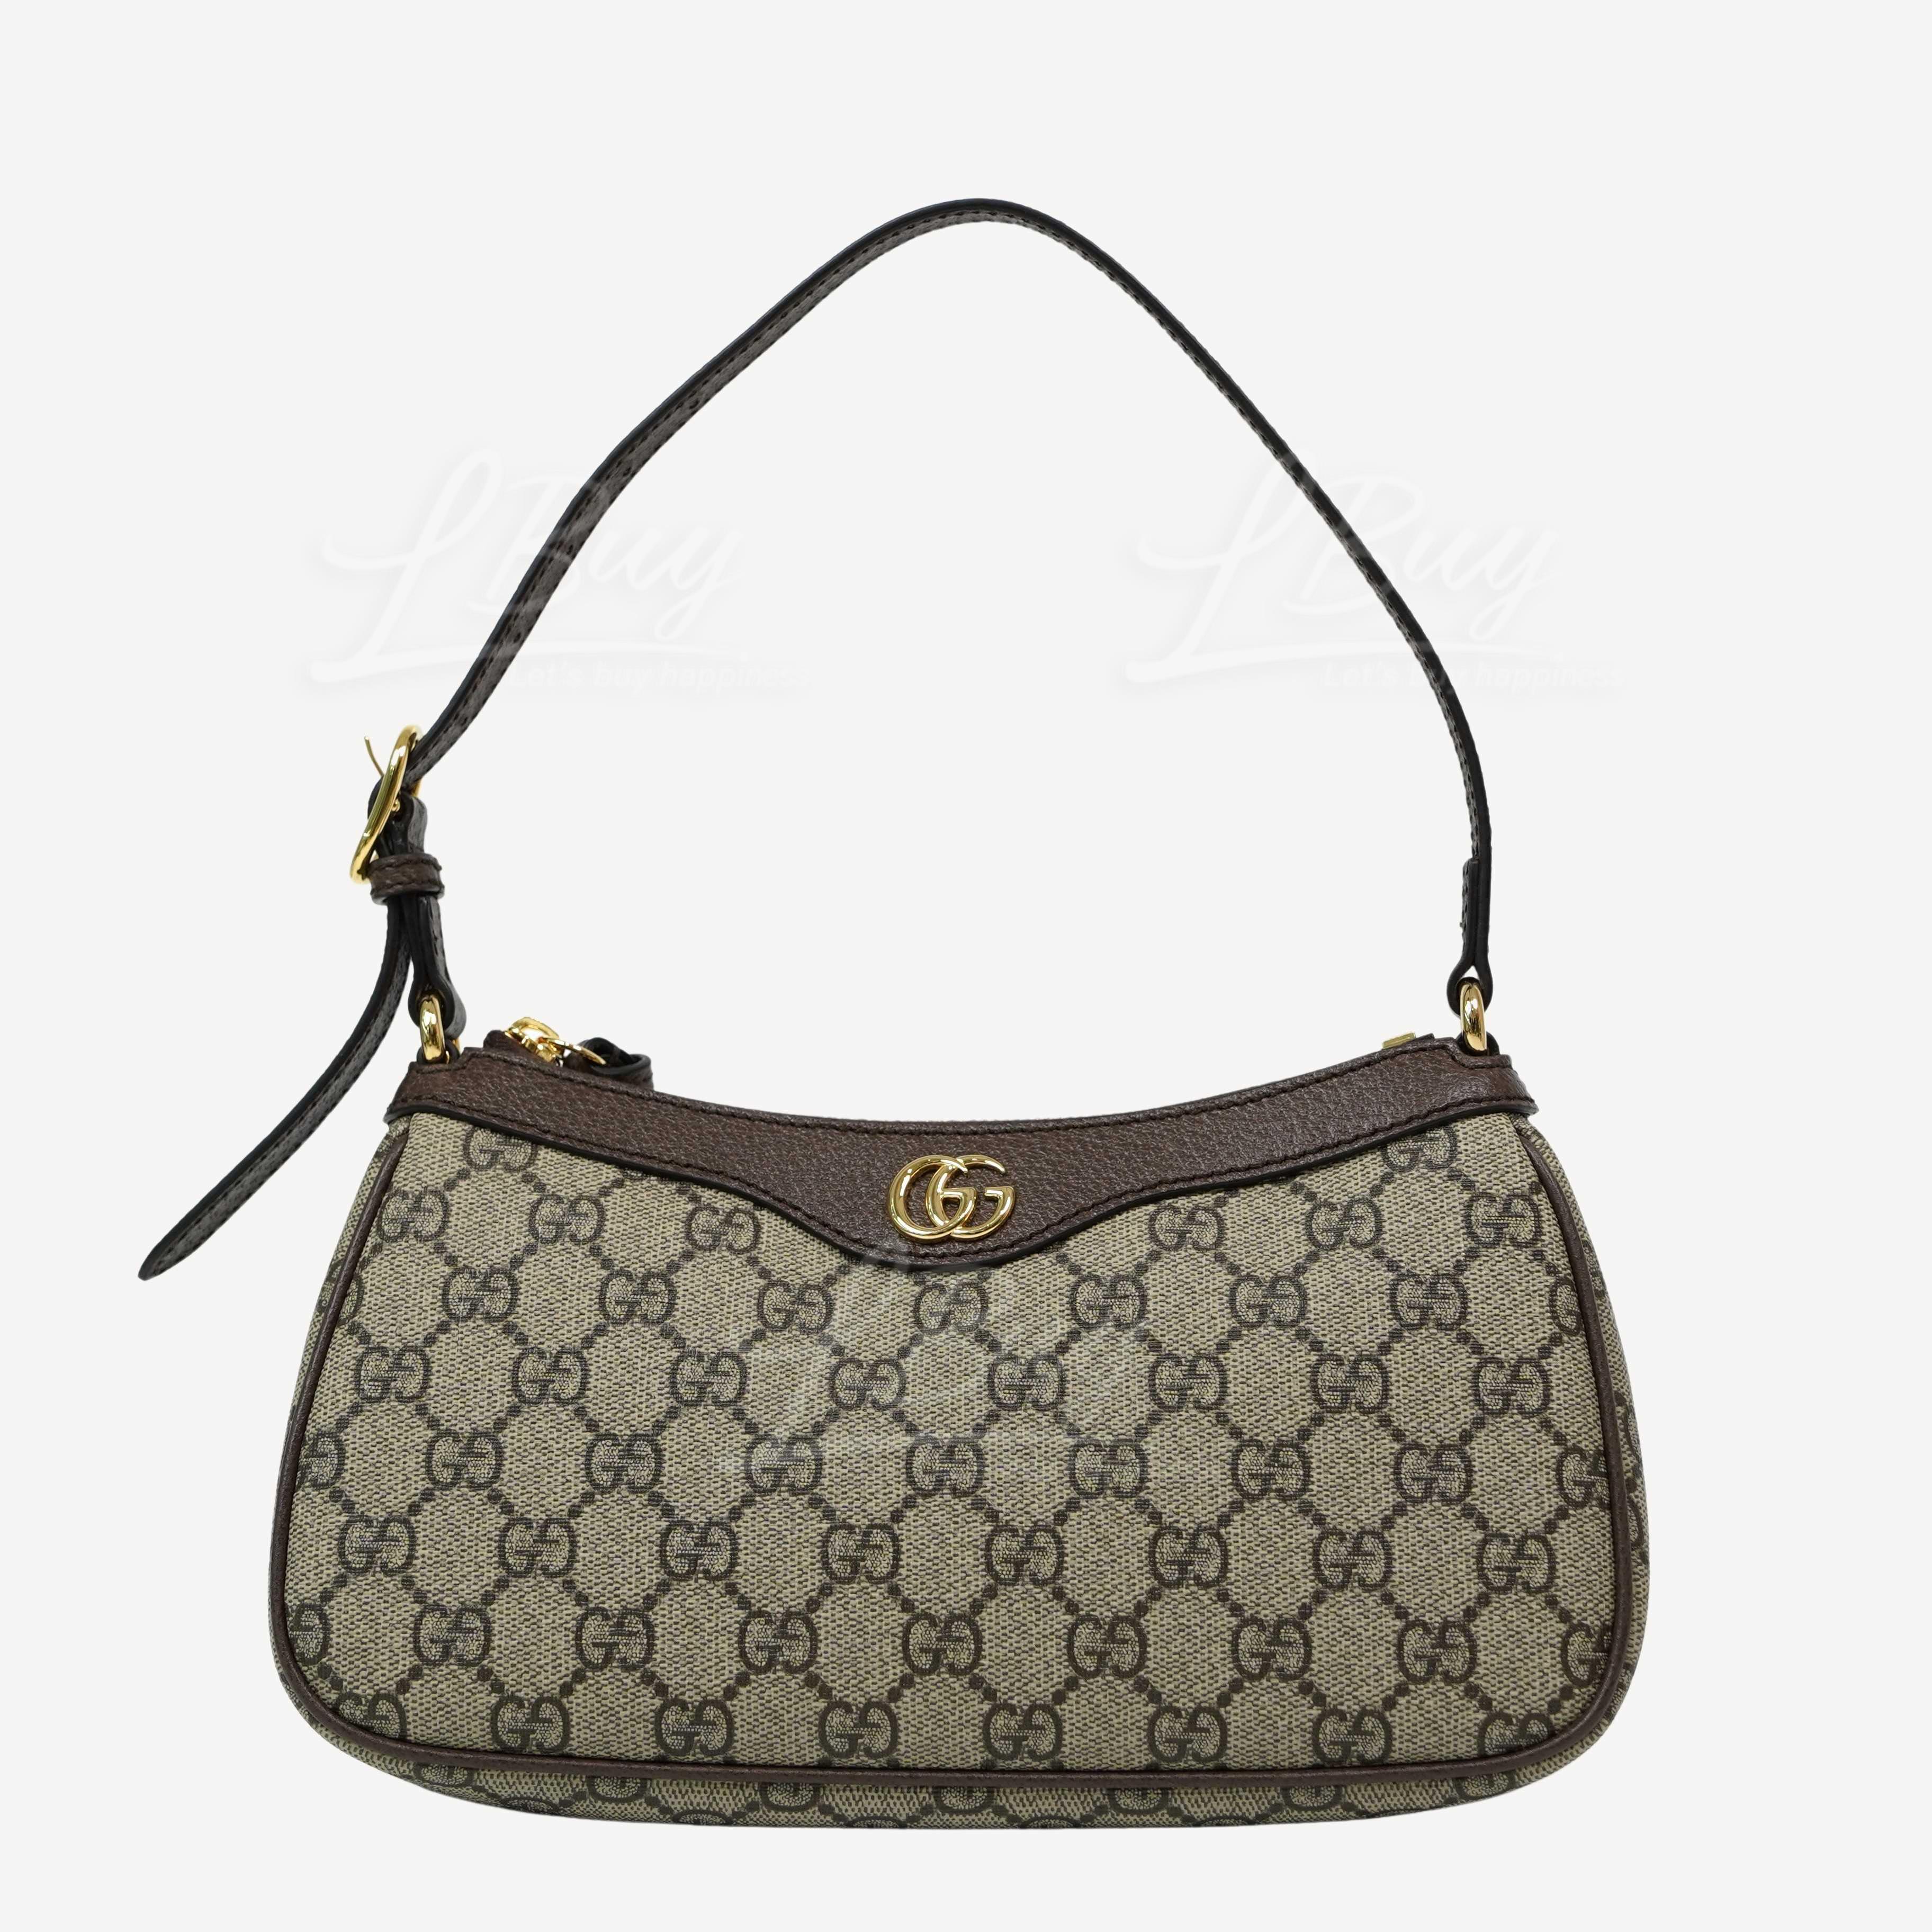 Gucci Ophidia Supreme GG Logo Small Handbag Beige and ebony 735145